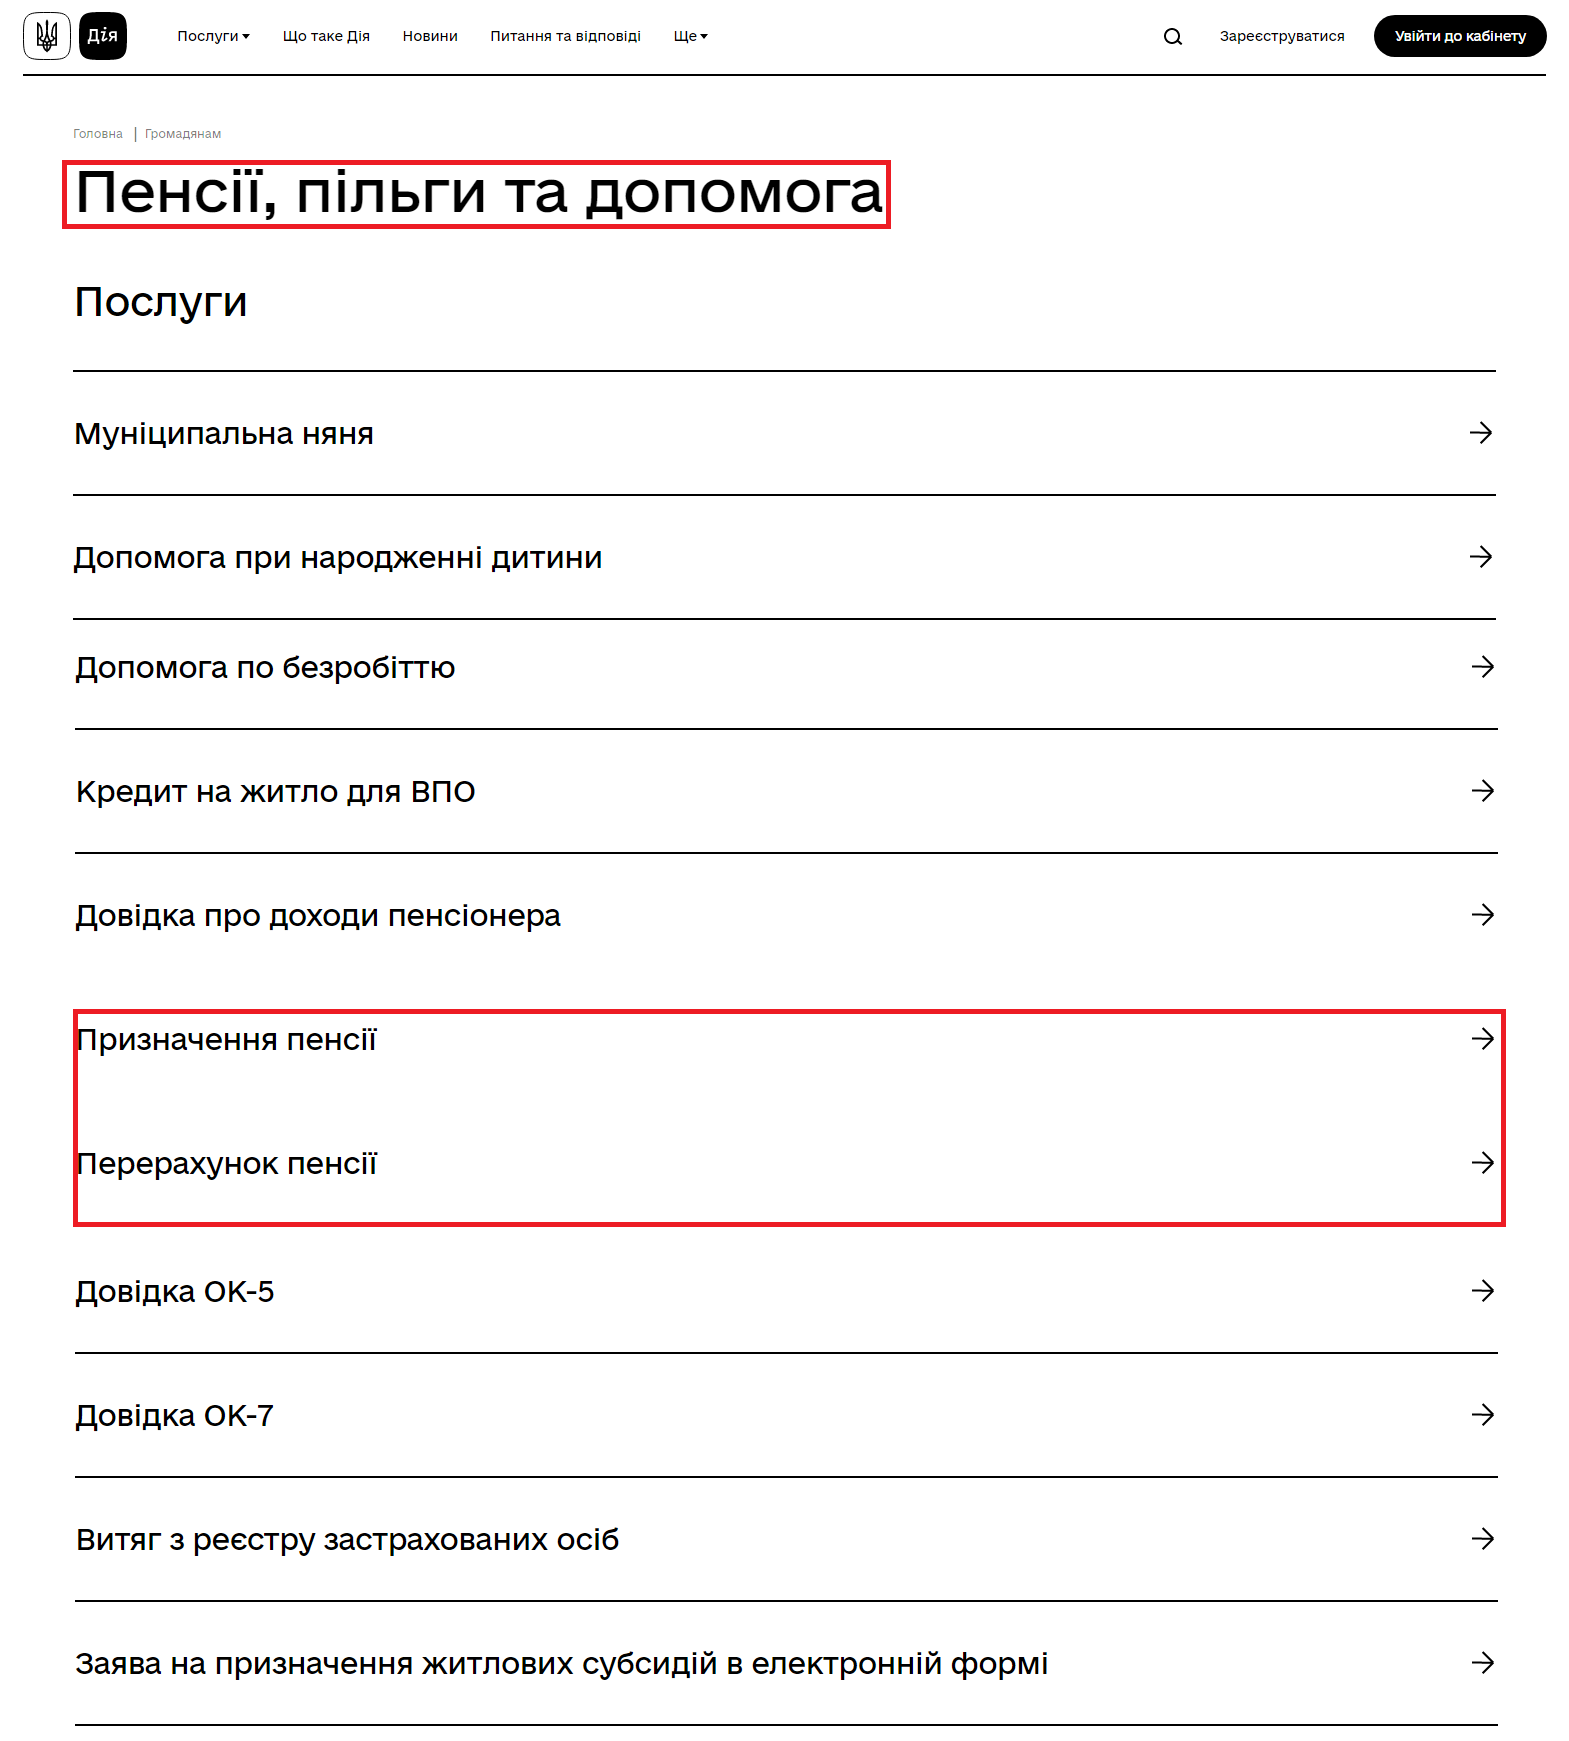 https://diia.gov.ua/services/categories/gromadyanam/pensiyi-pilgi-ta-dopomoga